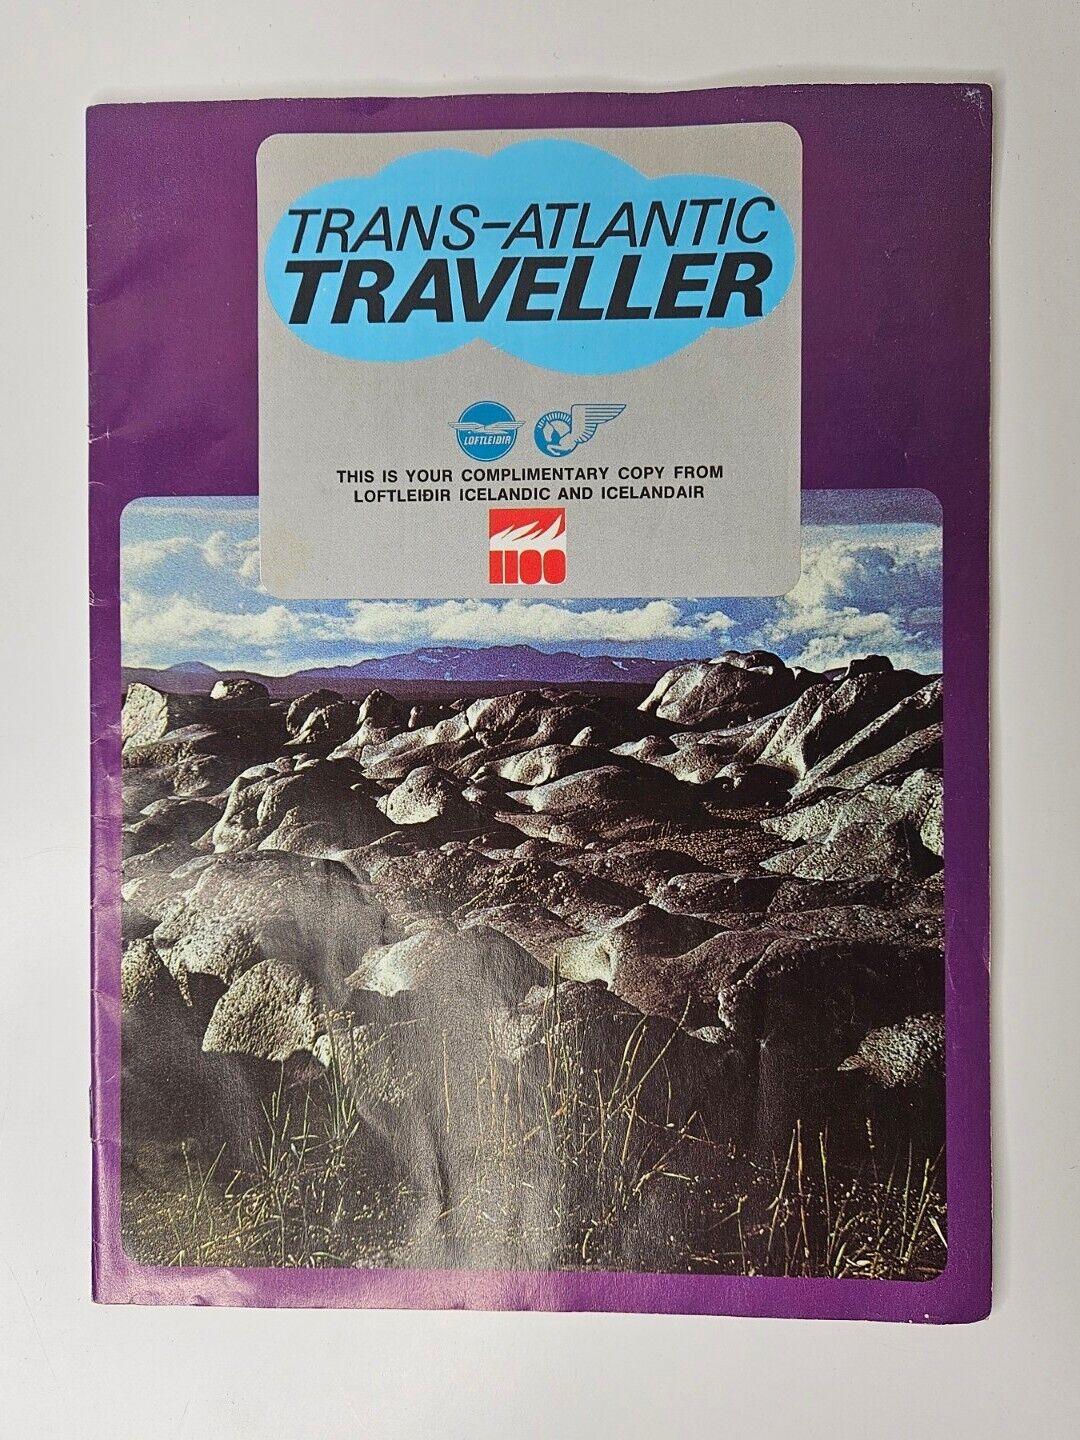 Vtg Trans Atlantic Traveller Guide Airlines In Flight Complimentary Copy 1973